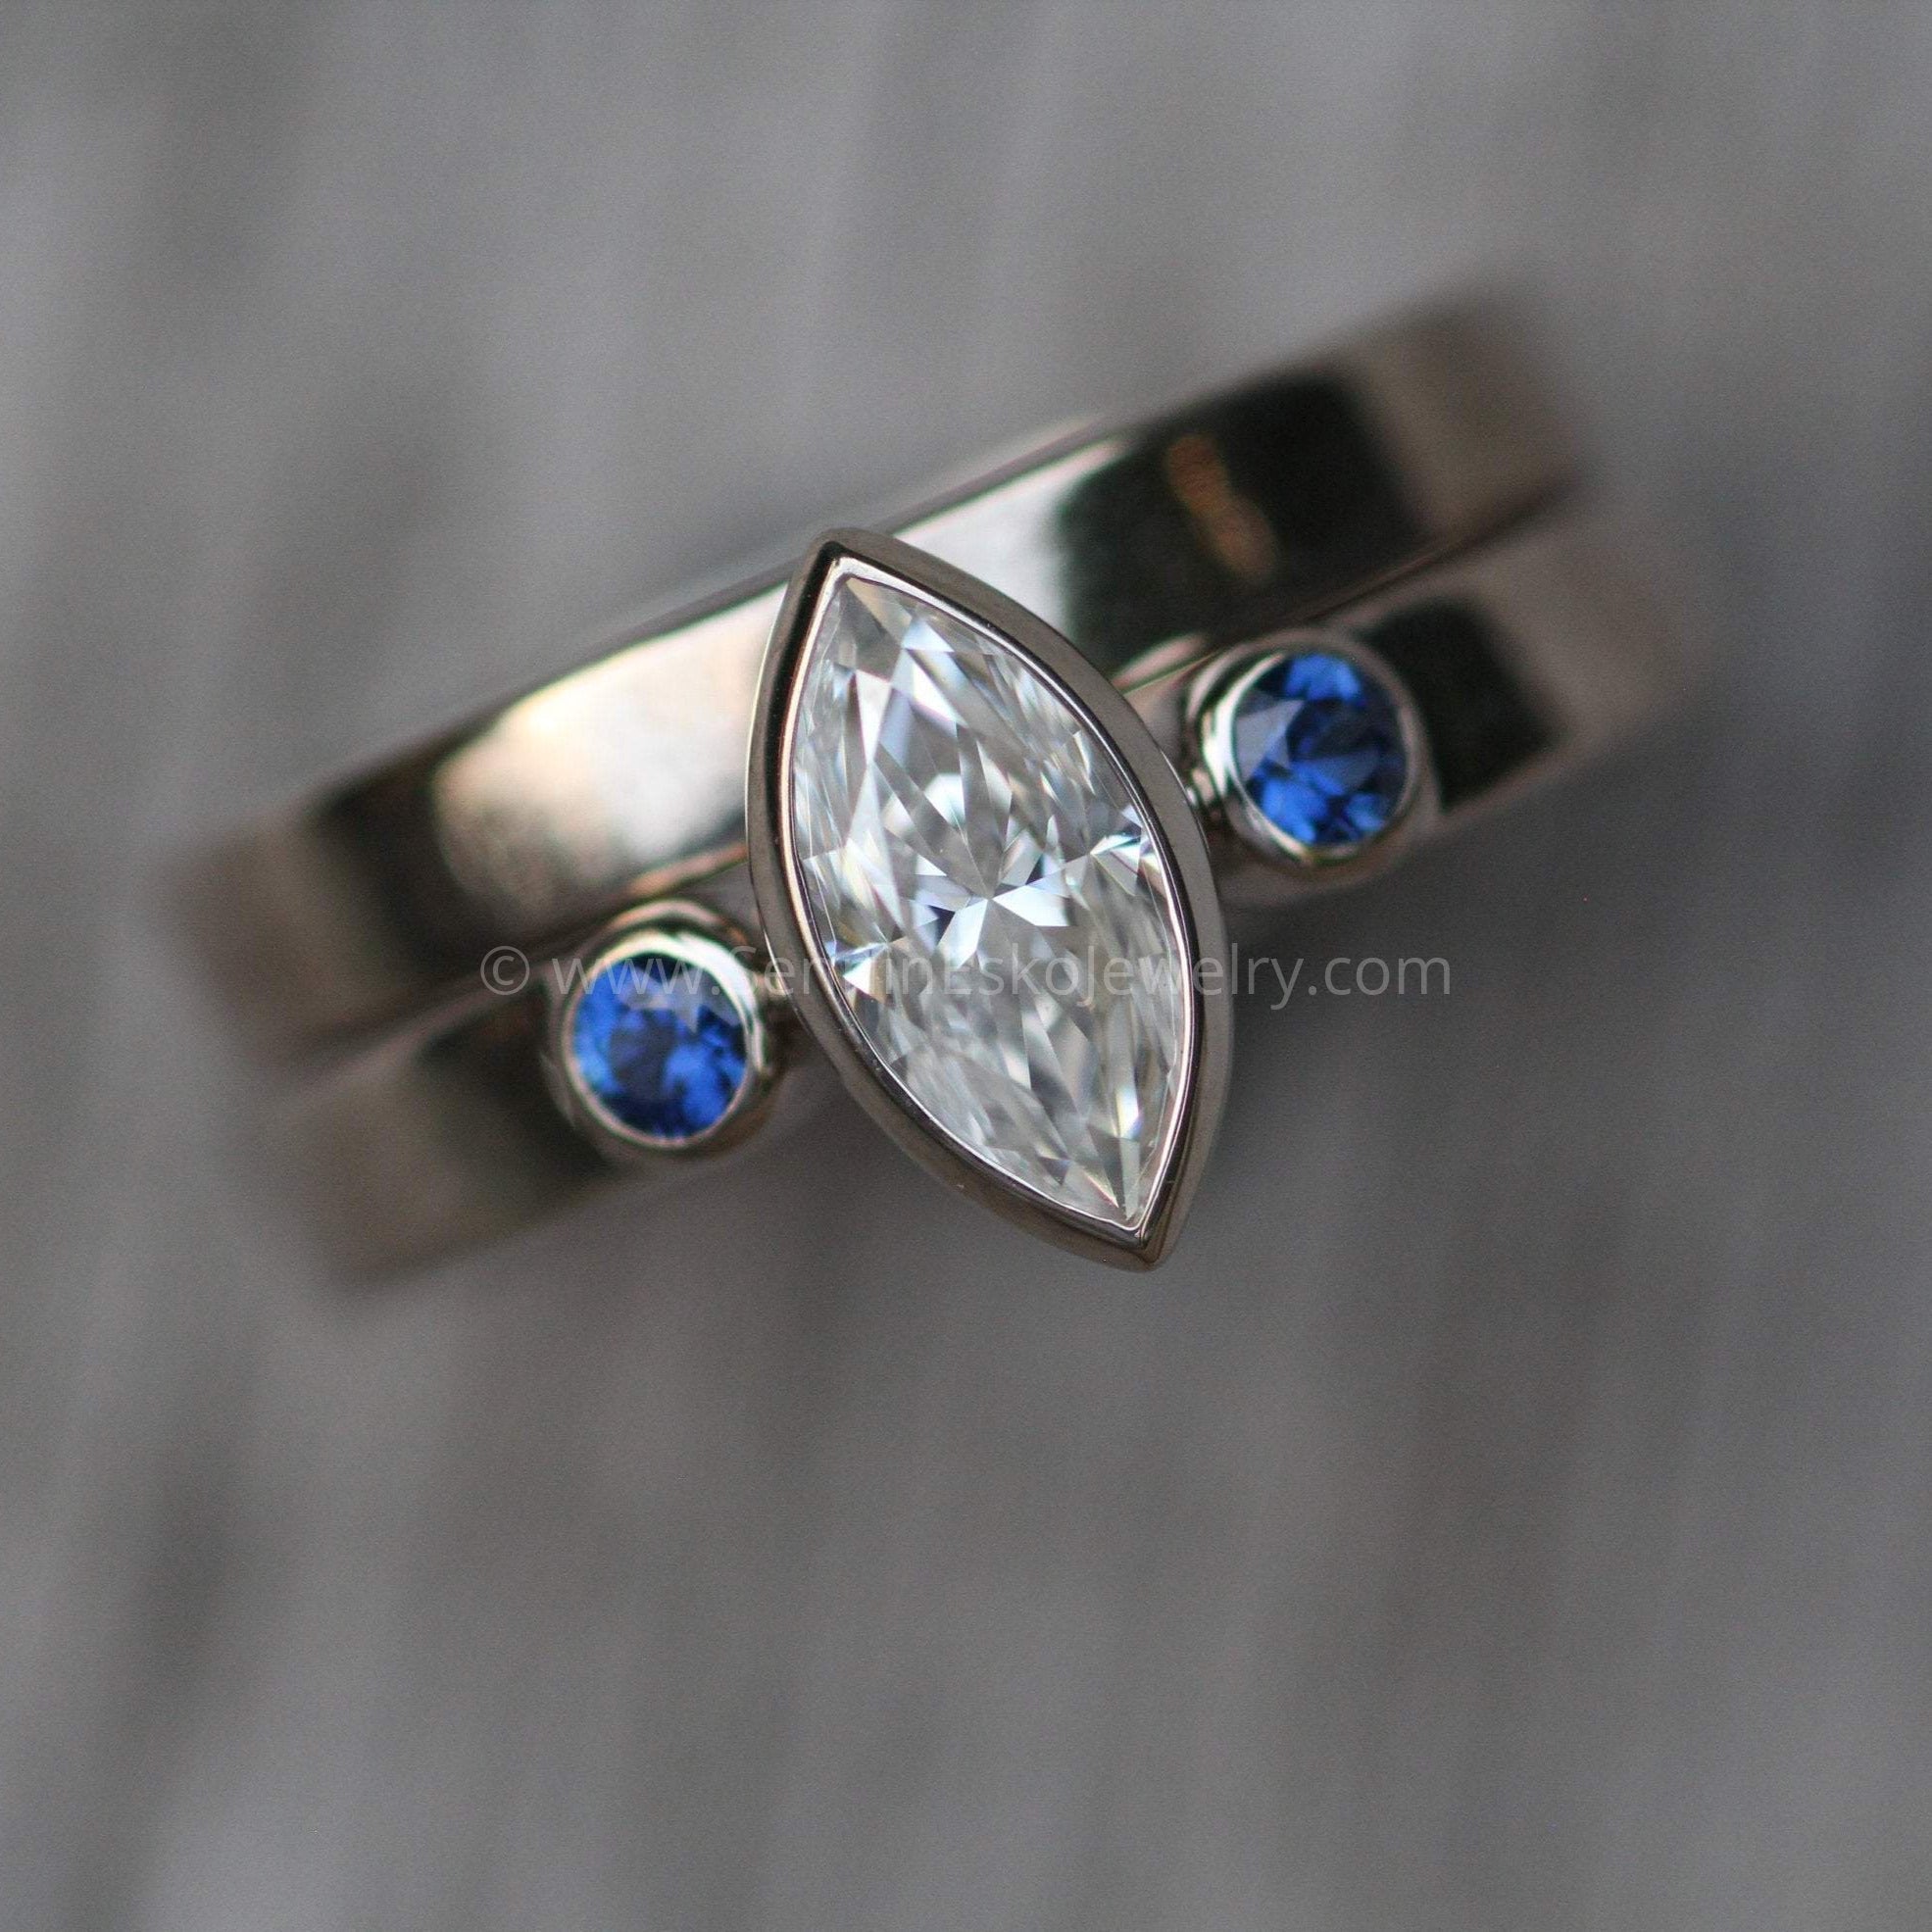 Purchase the High-Quality Women's 950 Palladium Wedding Rings | GLAMIRA.com